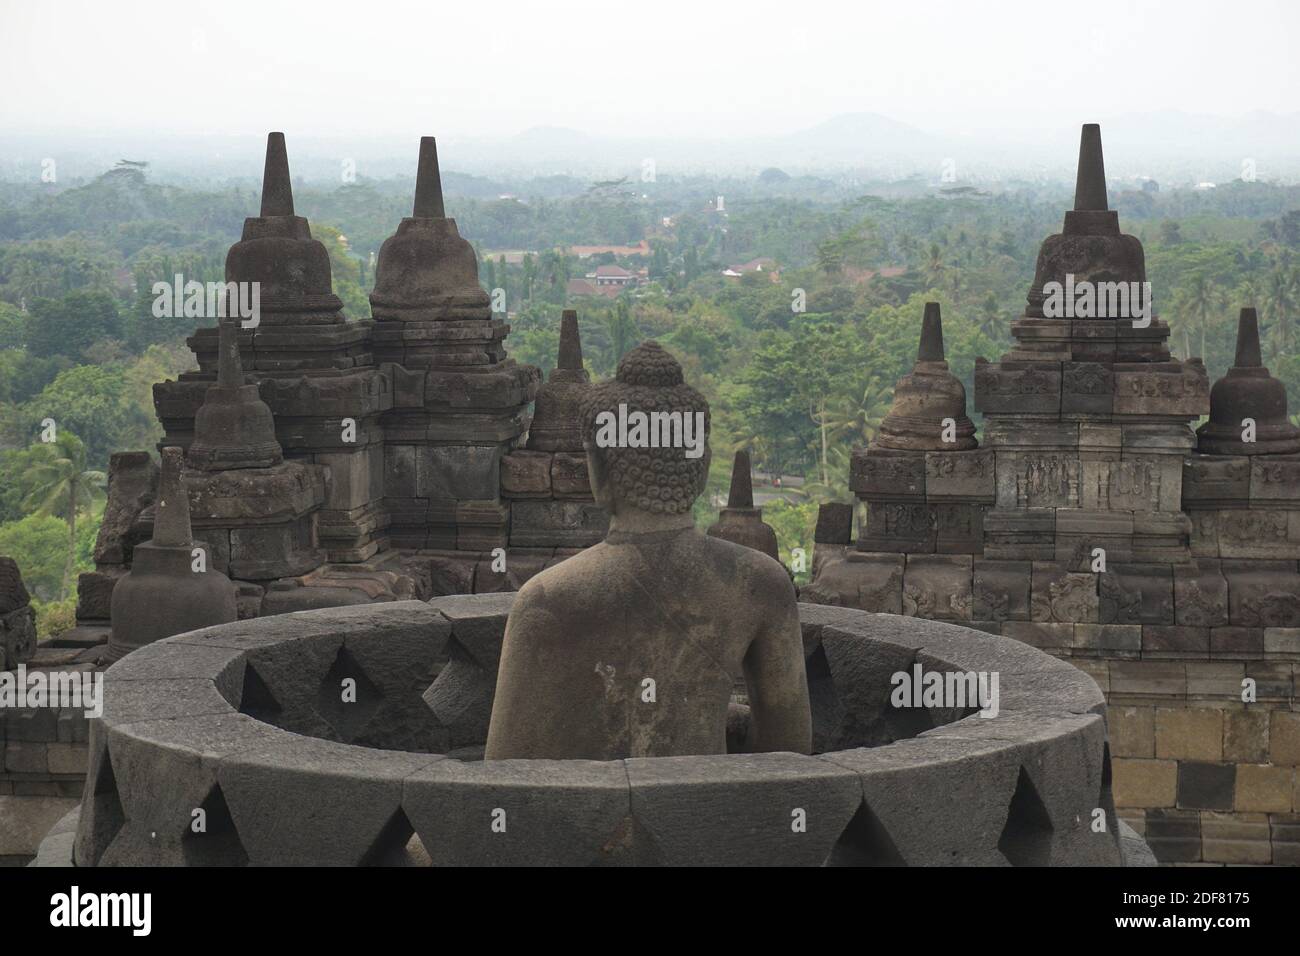 El templo budista de Borobudur en Yogyakarta, Java, Indonesia. Foto de stock